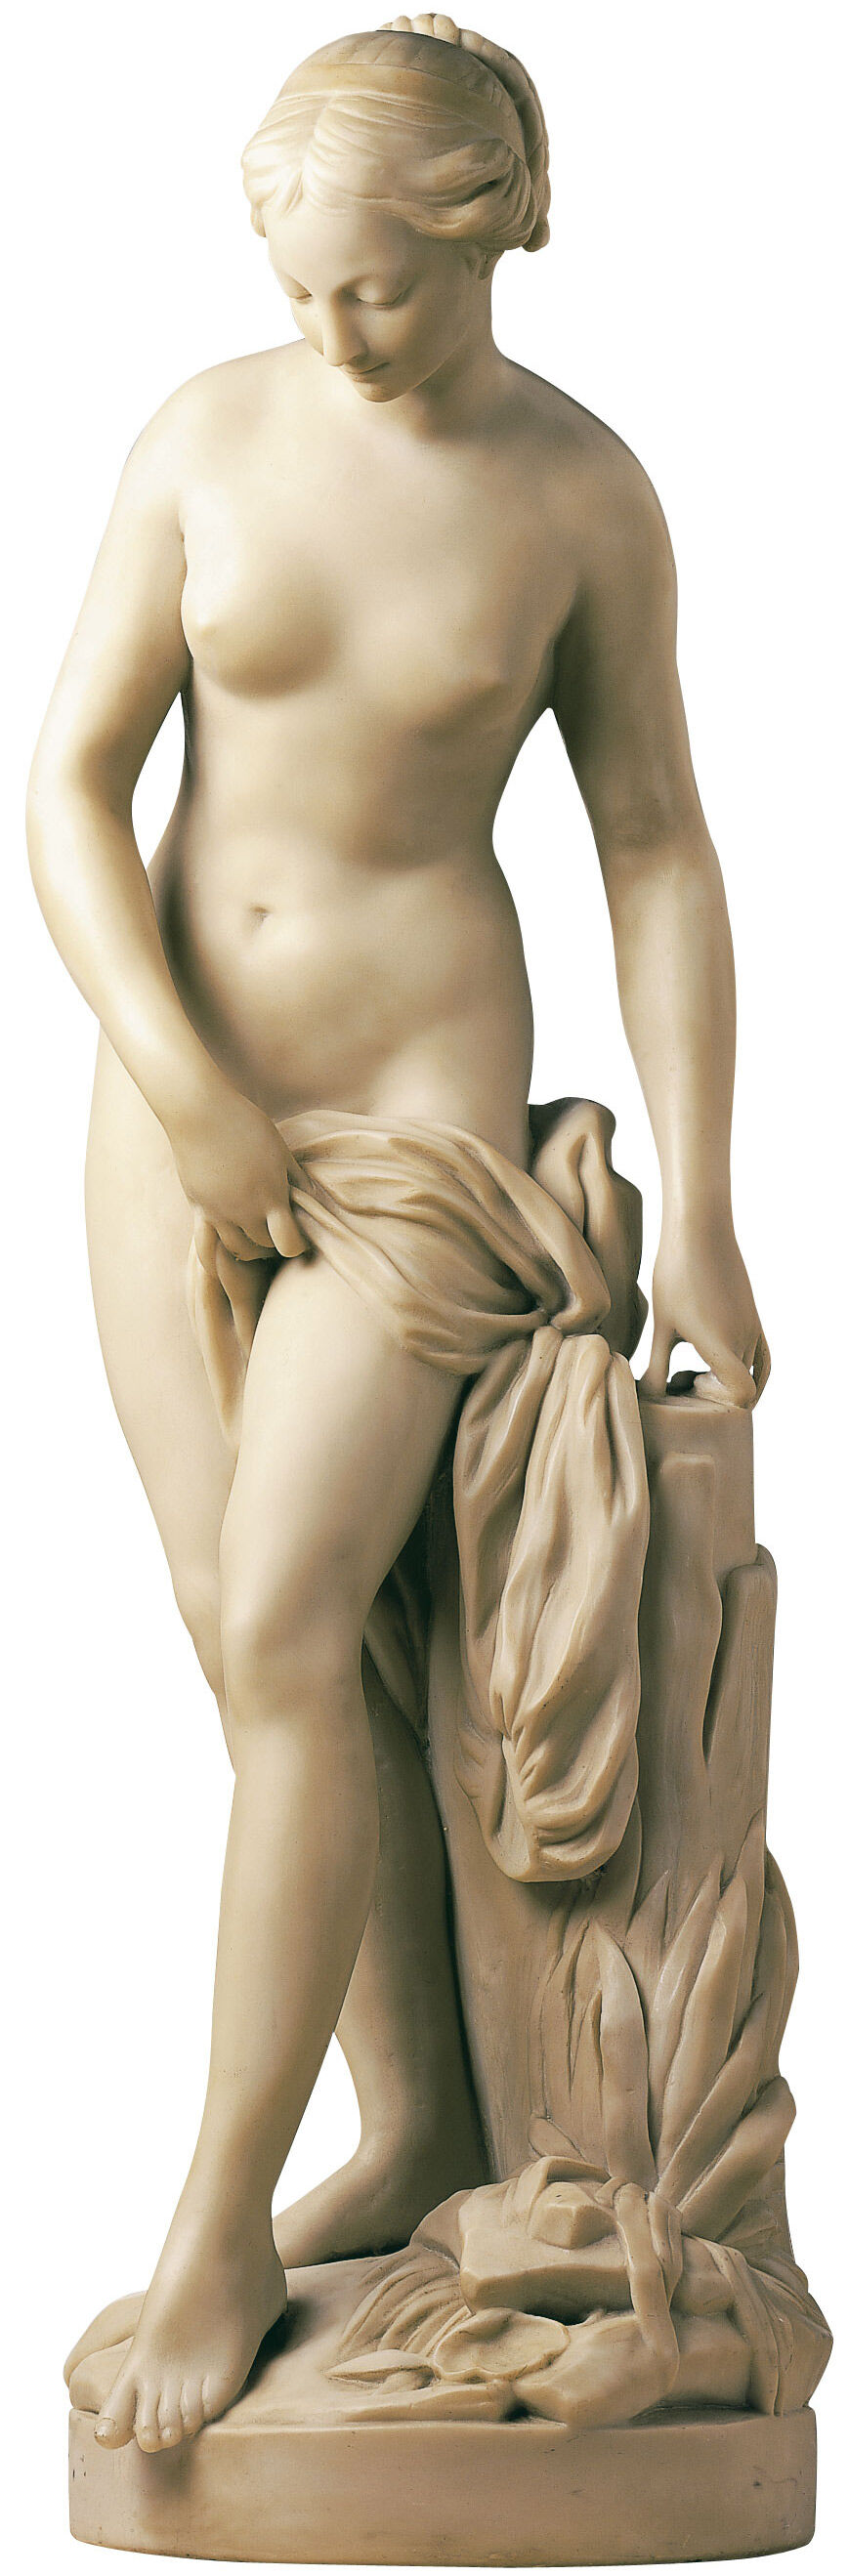 Skulptur "Bader" (reduktion), kunstmarmor von Etienne-Maurice Falconet